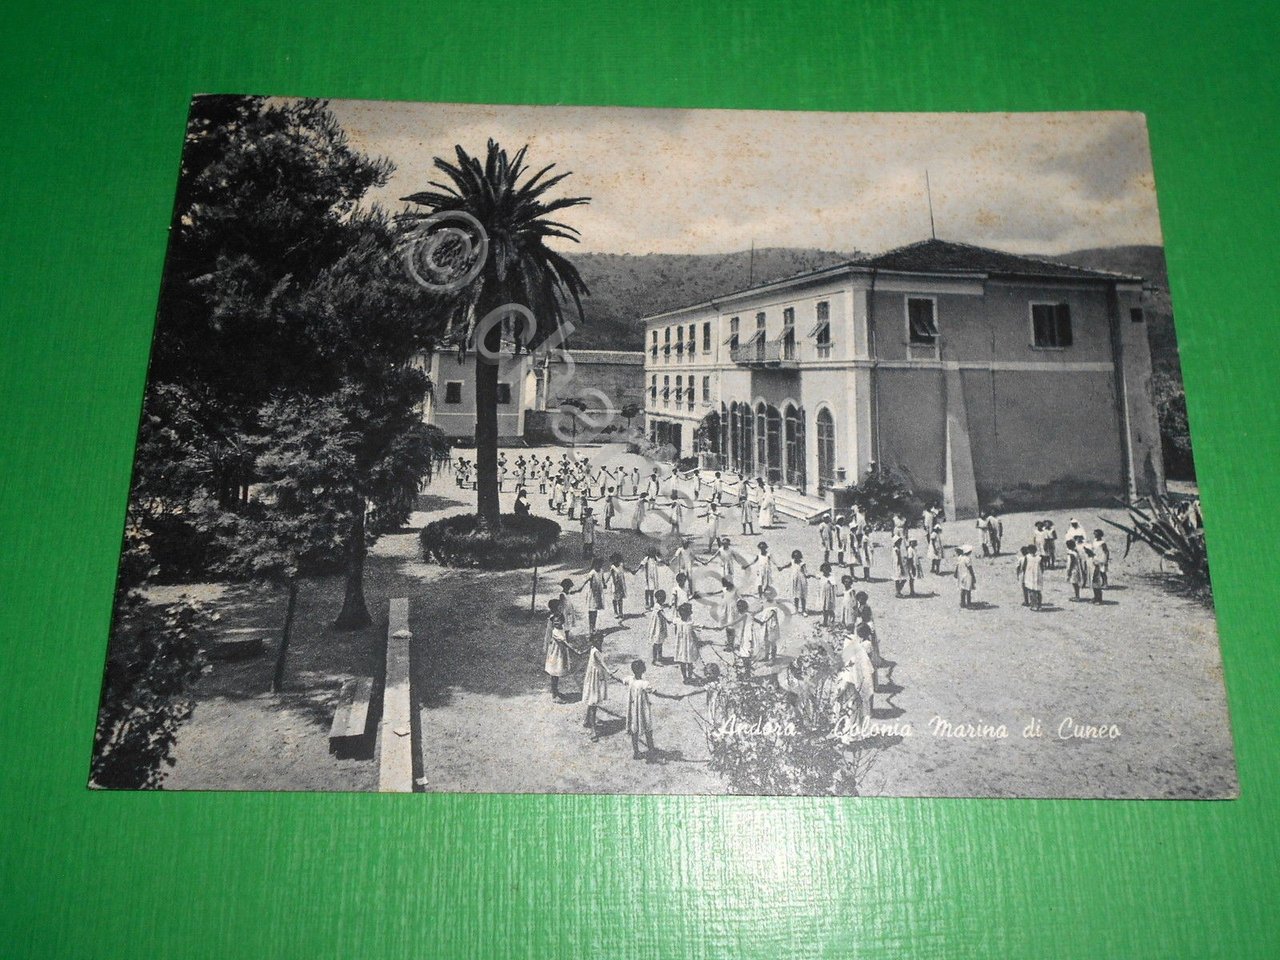 Cartolina Andora - Colonia Marina di Cuneo 1950 ca.